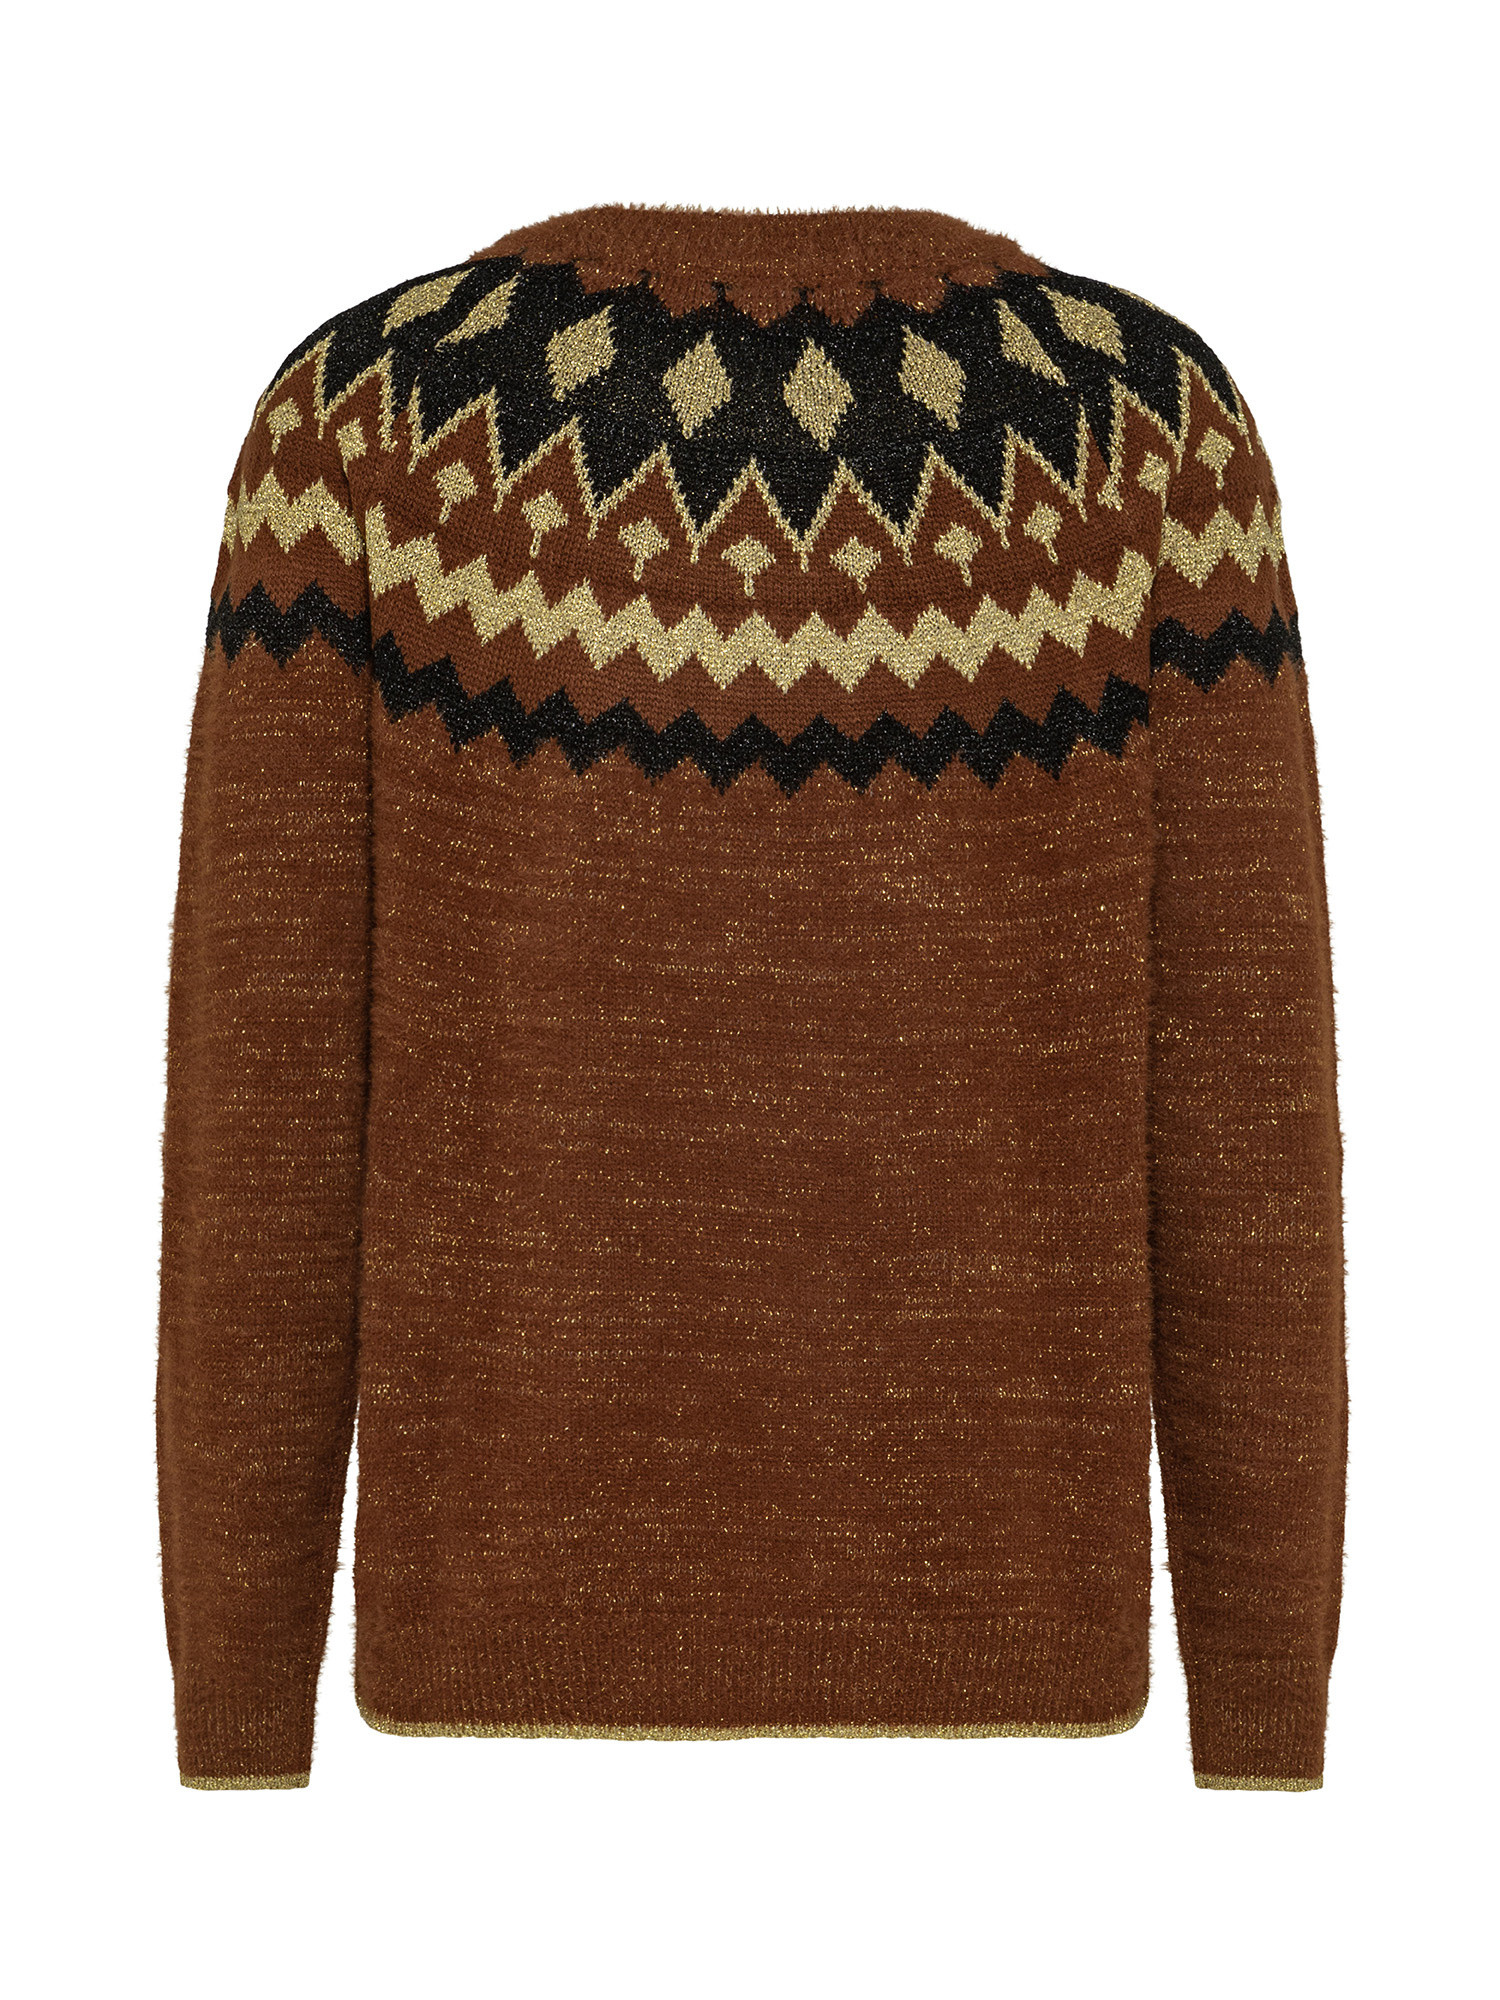 Koan - Crewneck pullover with lurex, Brown, large image number 1